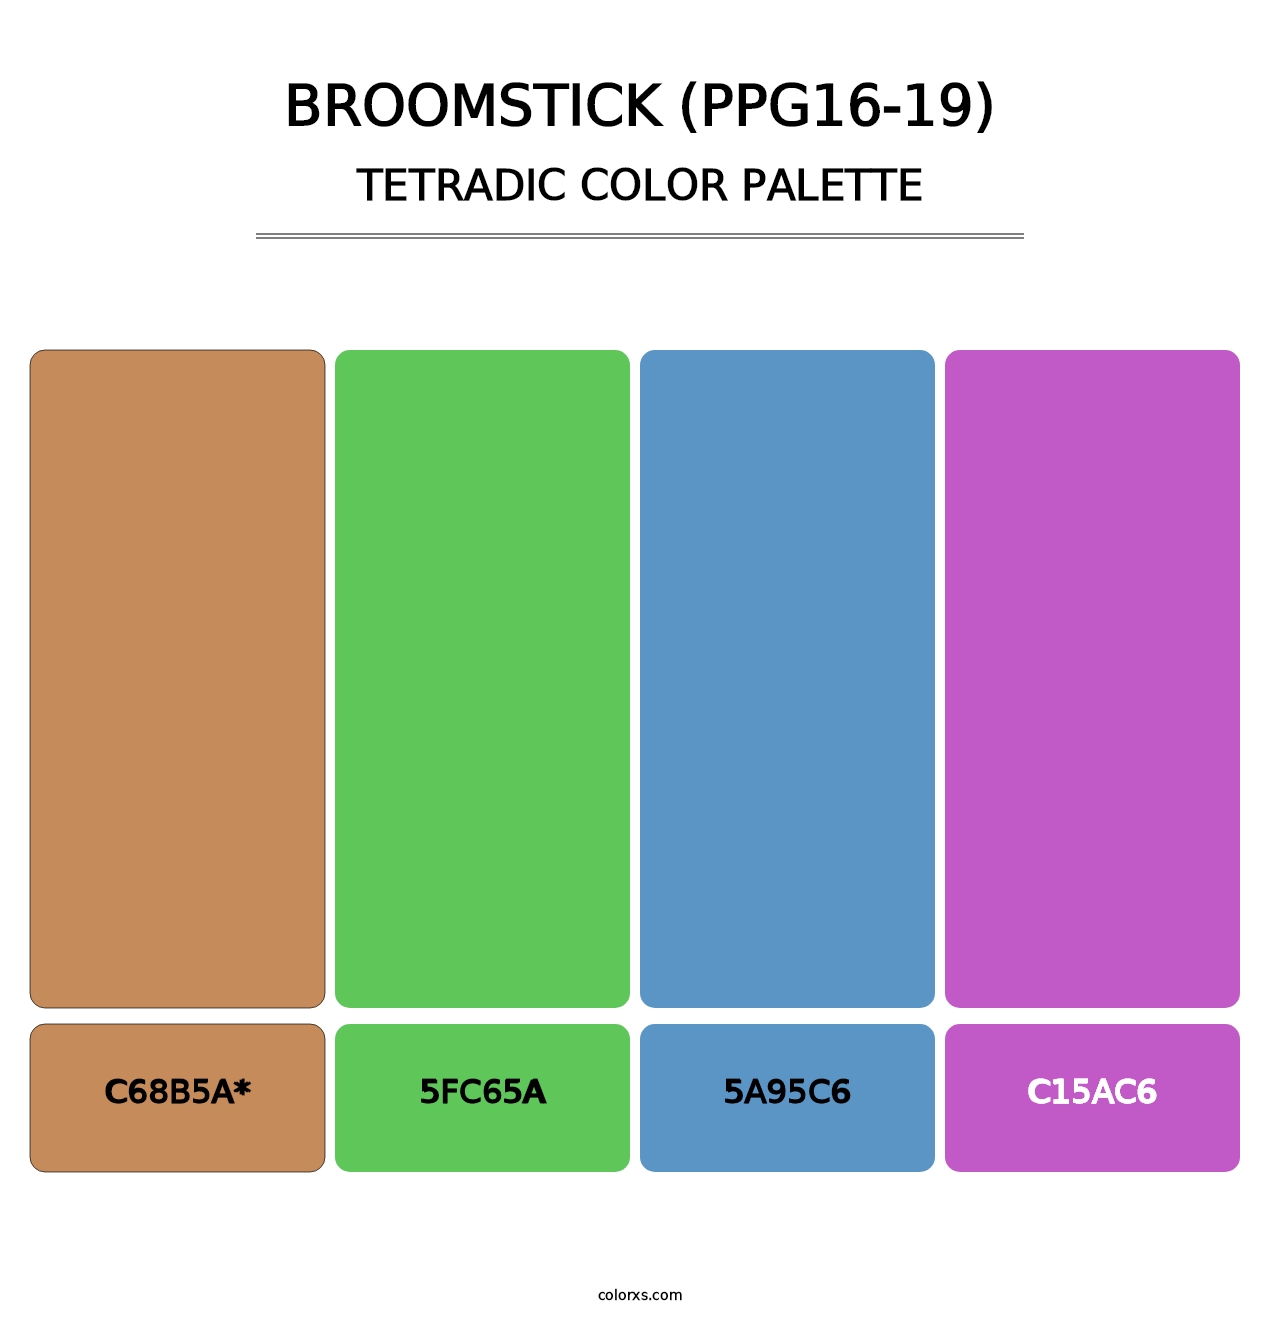 Broomstick (PPG16-19) - Tetradic Color Palette